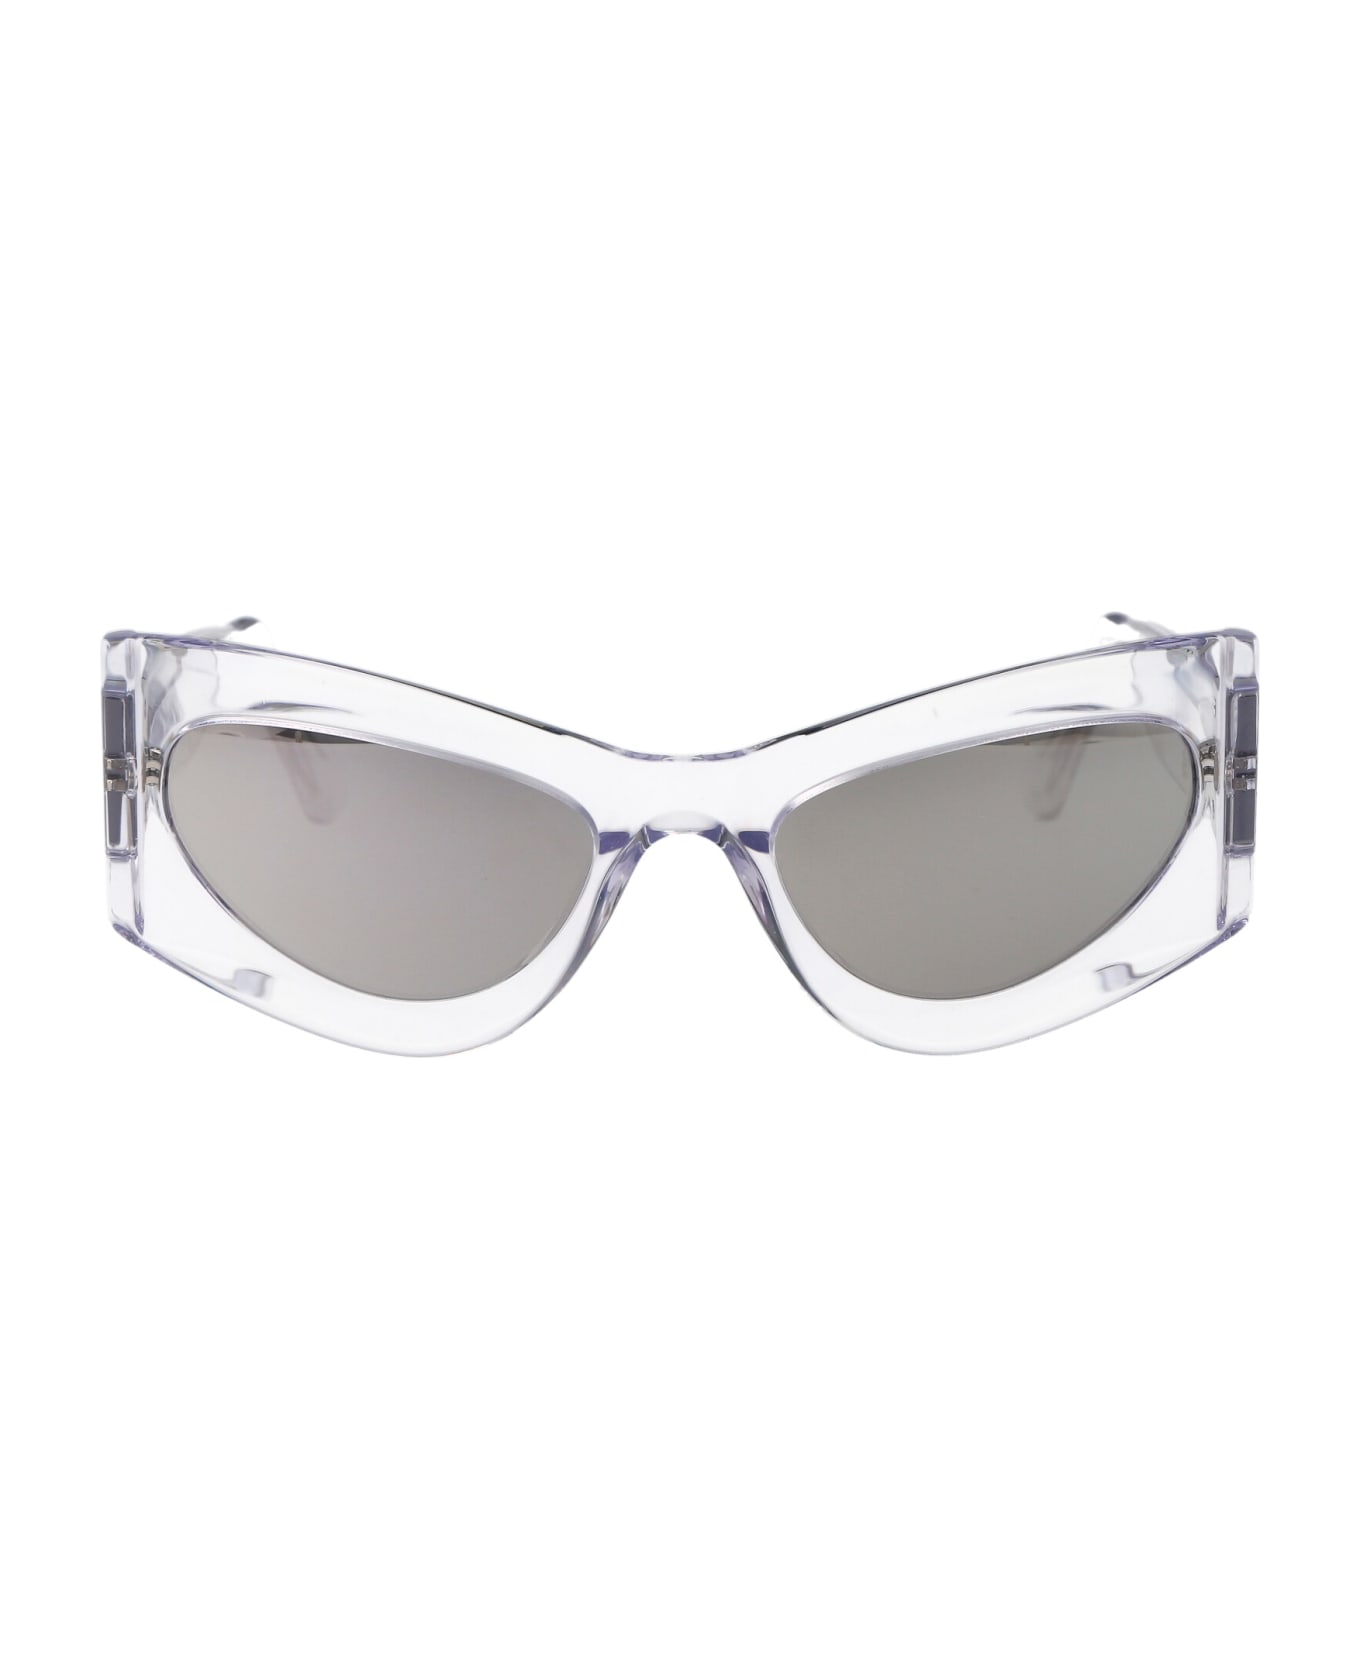 GCDS Gd0036 Sunglasses - 26C CRYSTAL サングラス